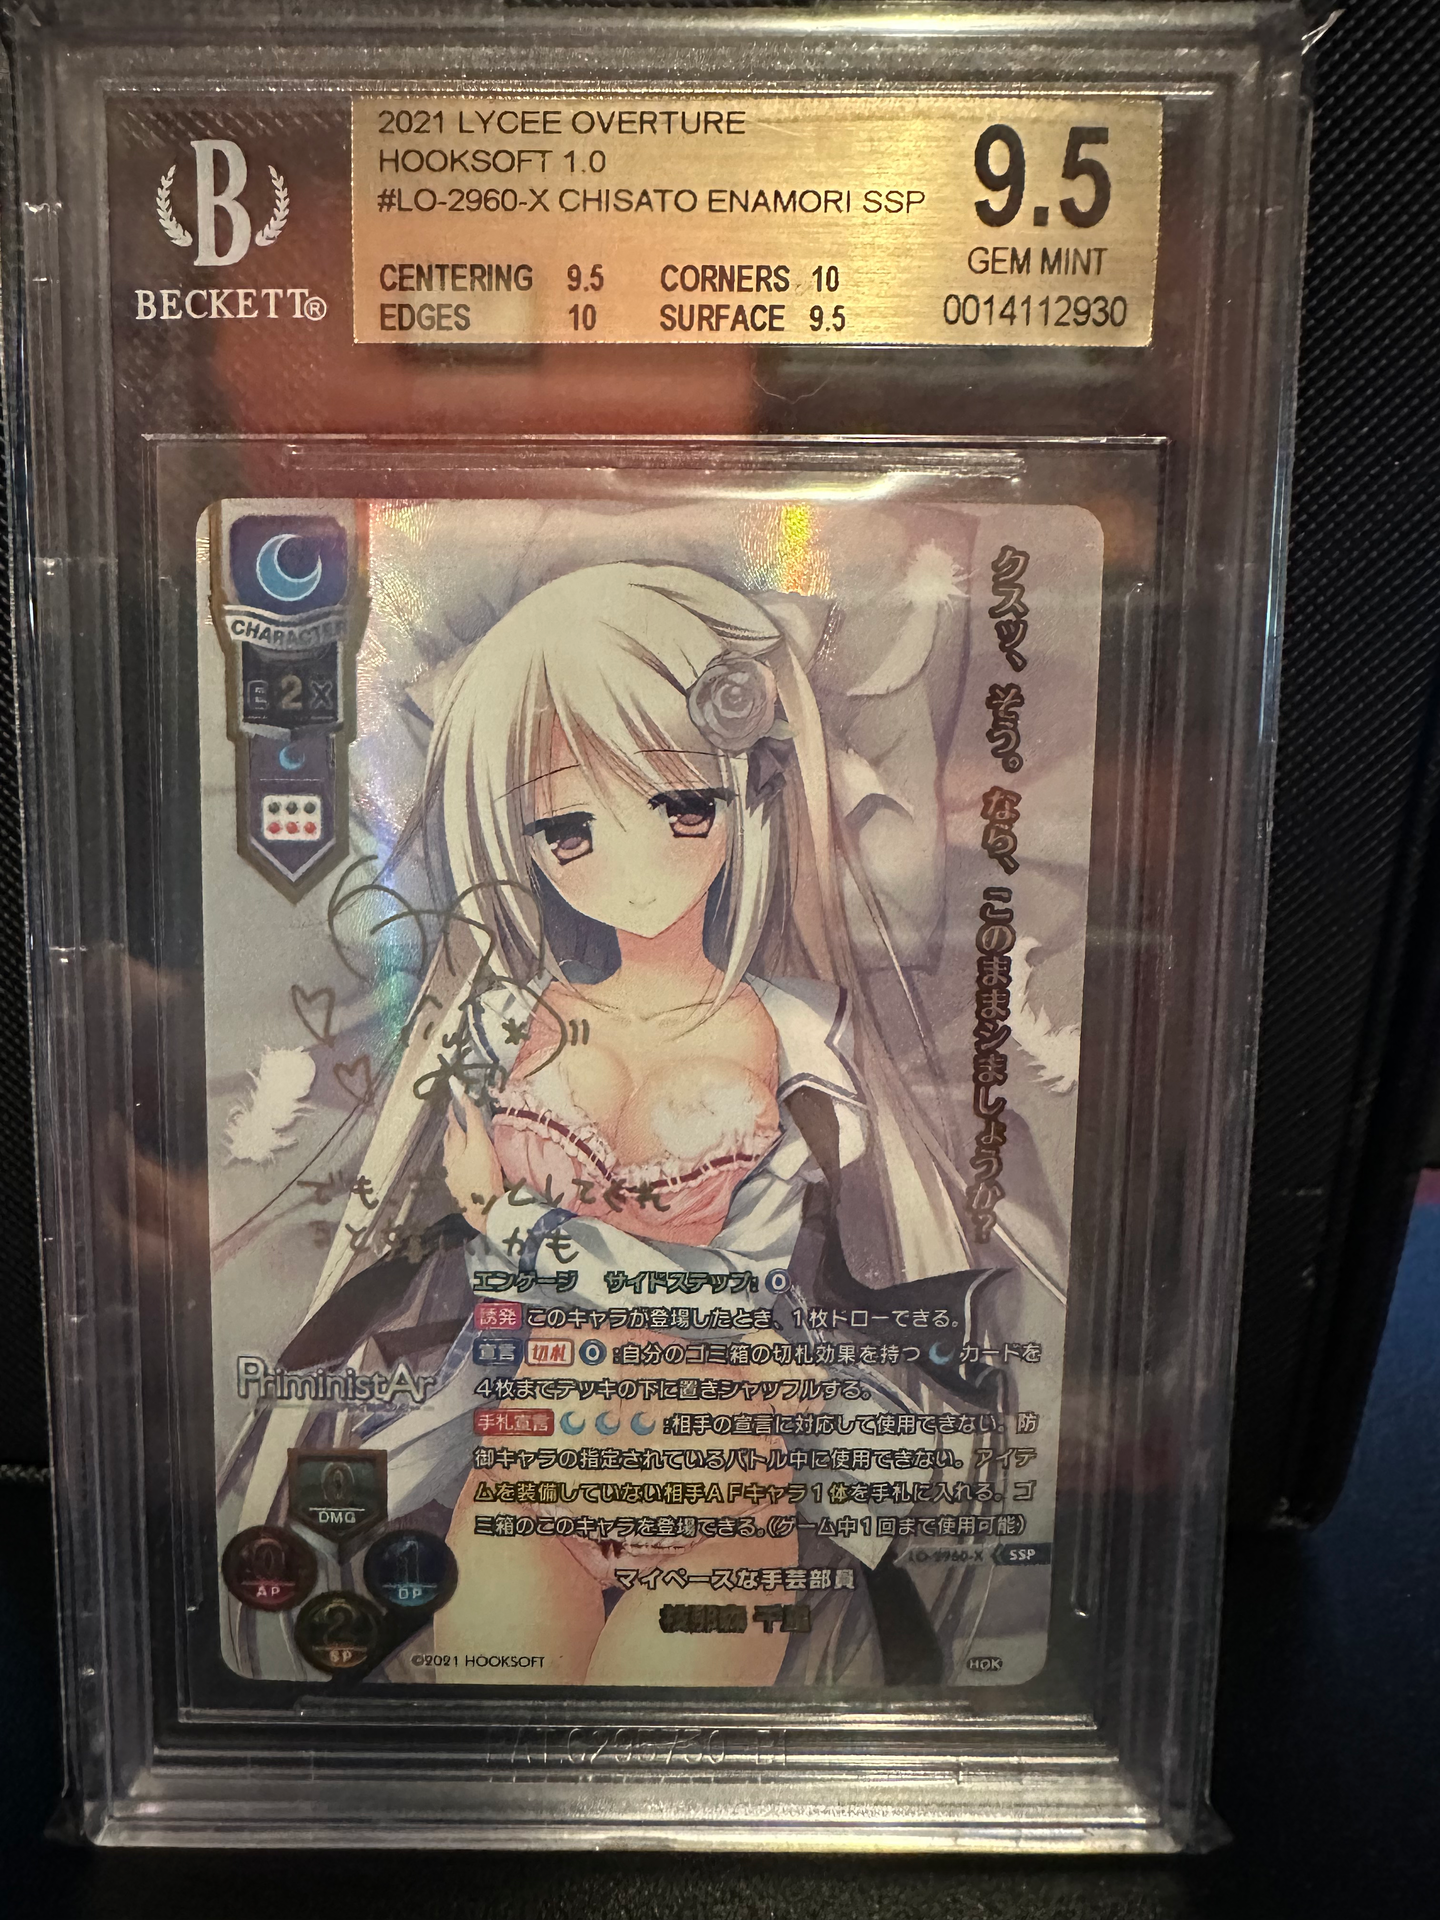 BGS 9.5 Japanese Chisato Enamori SSP (Graded Card)